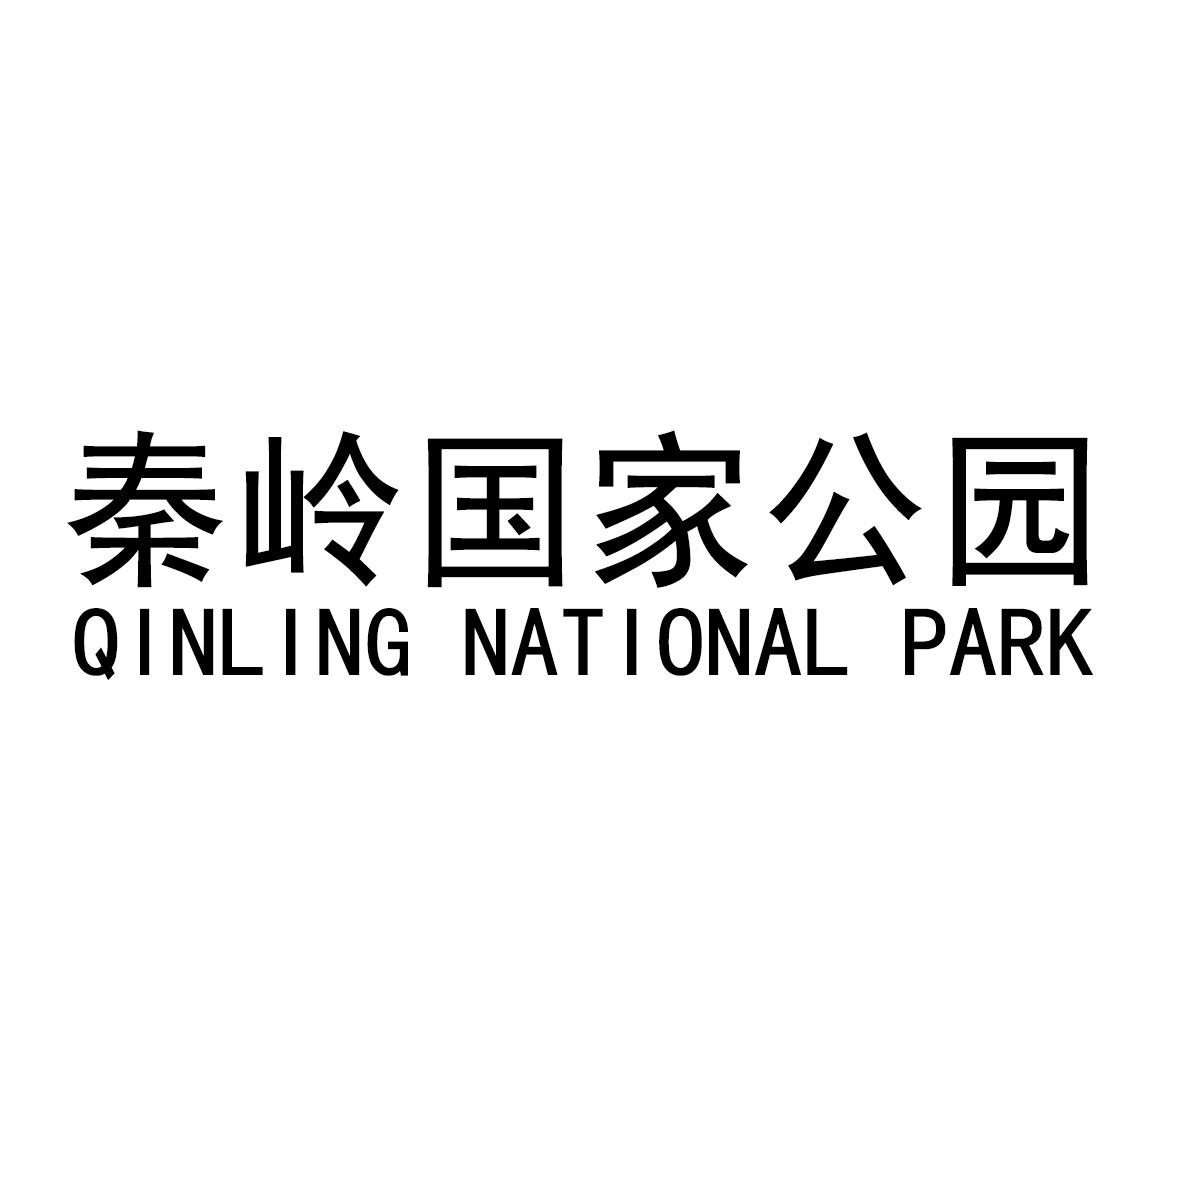 秦岭国家公园 QINLING NATIONAL PARK